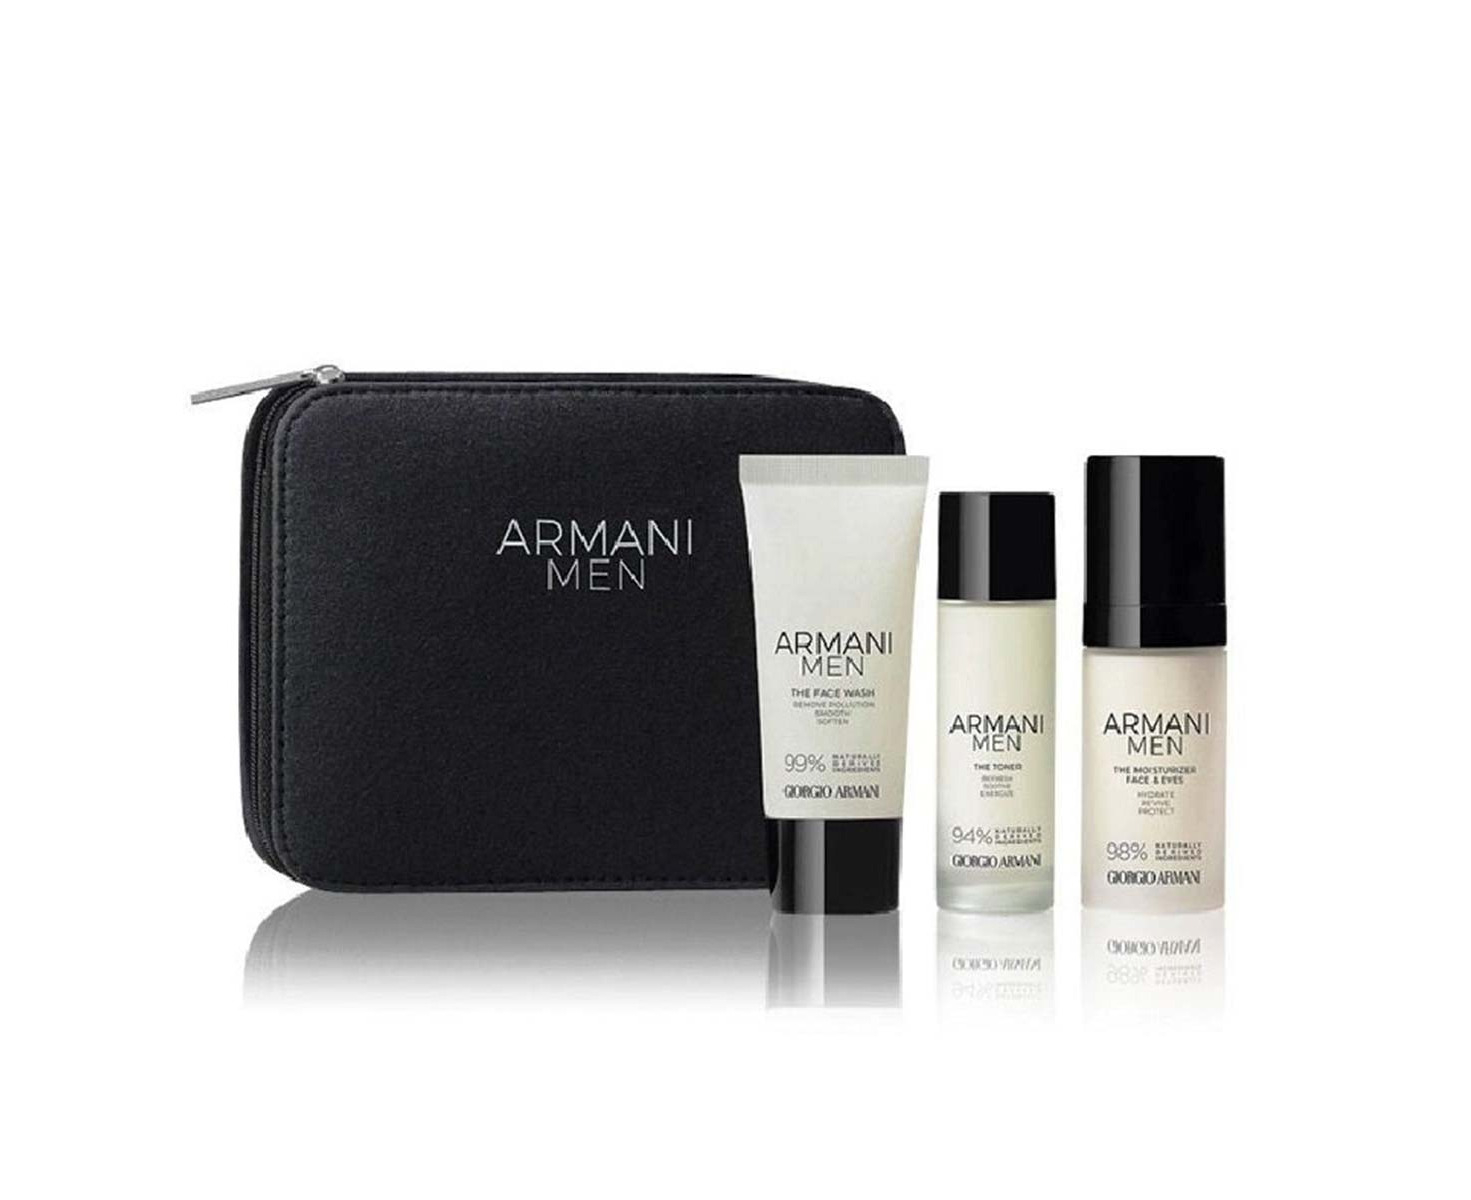 Giorgio Armani Men Skincare Travel Kit 